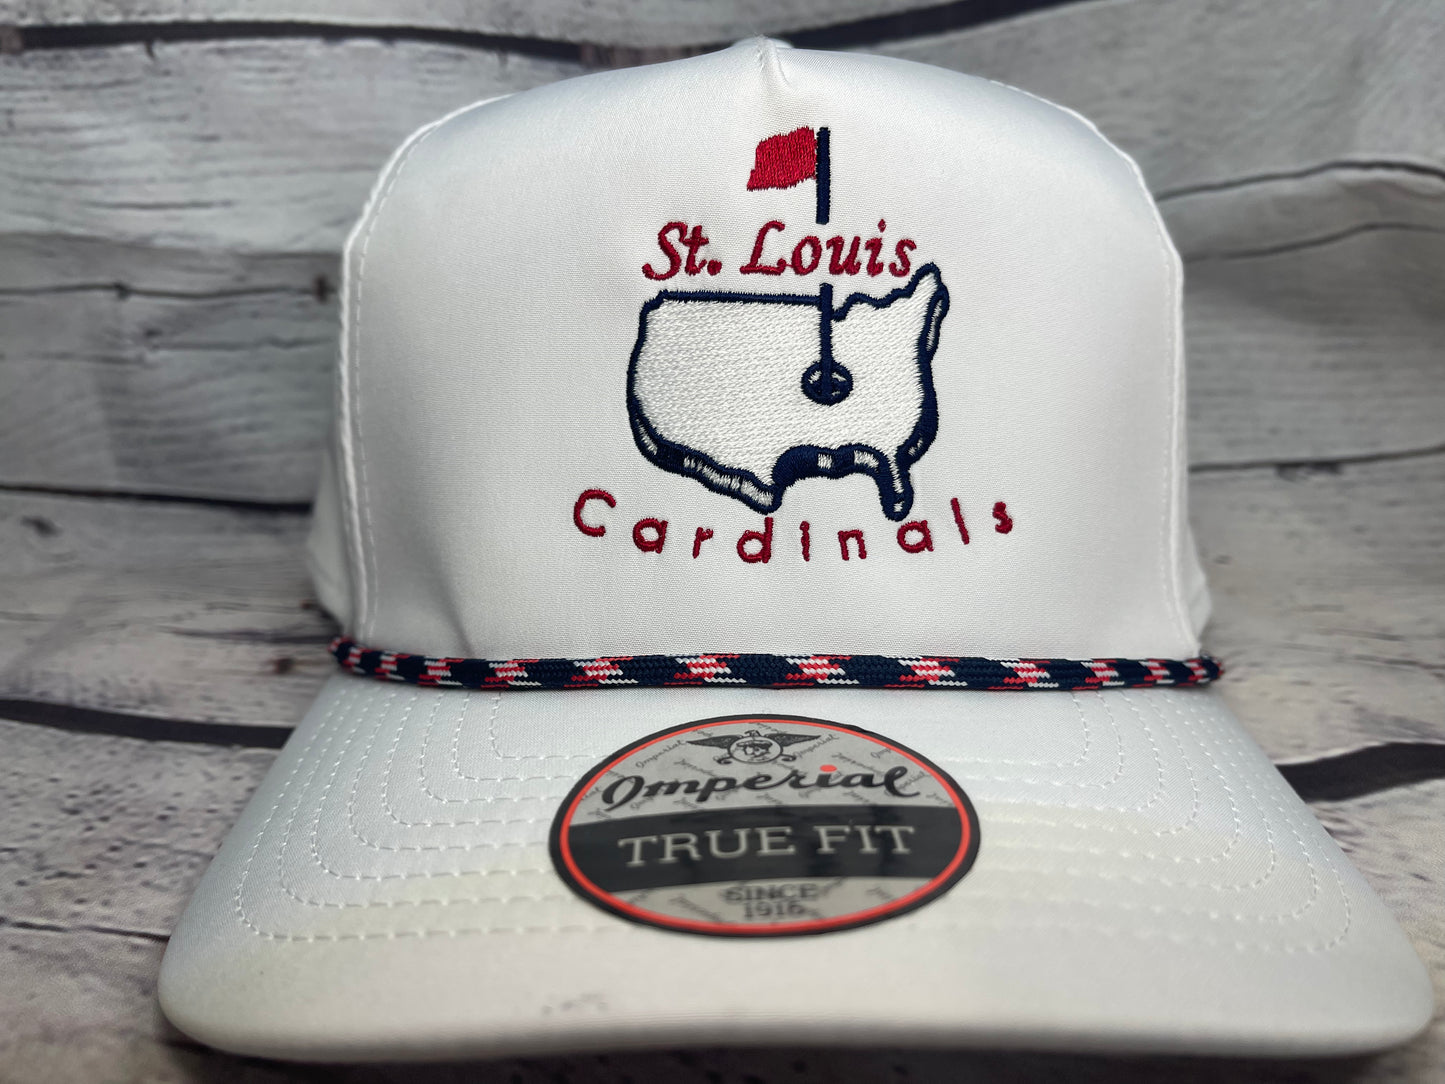 St. Louis Cardinals Imperial Golf hat.